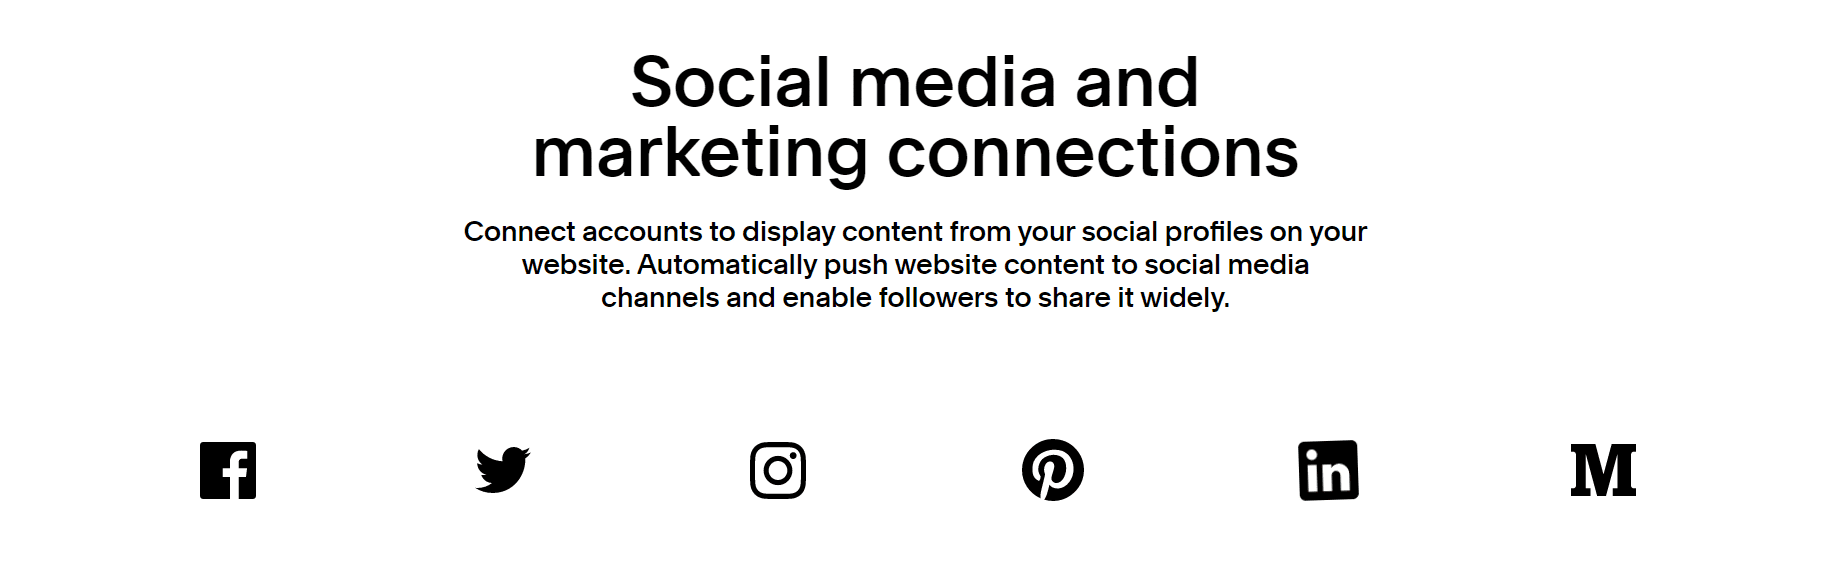 Social media and marketing banner